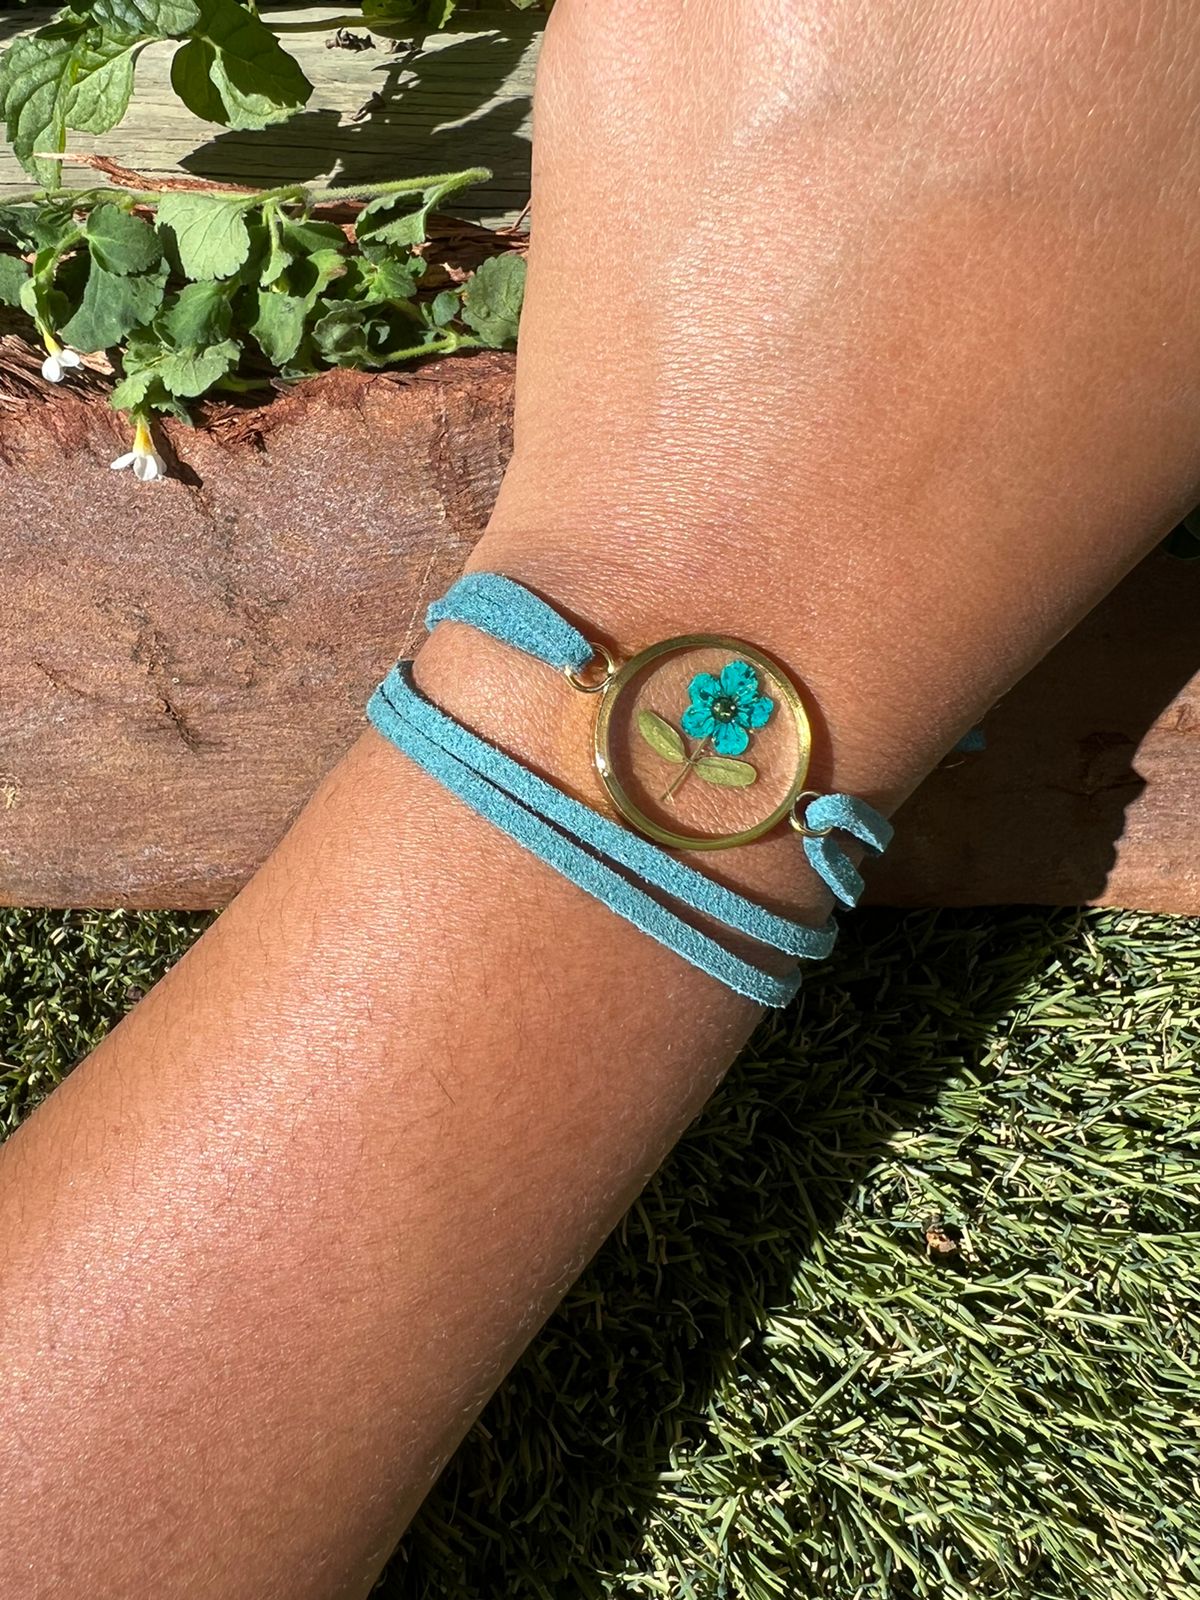 Tiny real blue flower round adjustable bracelet